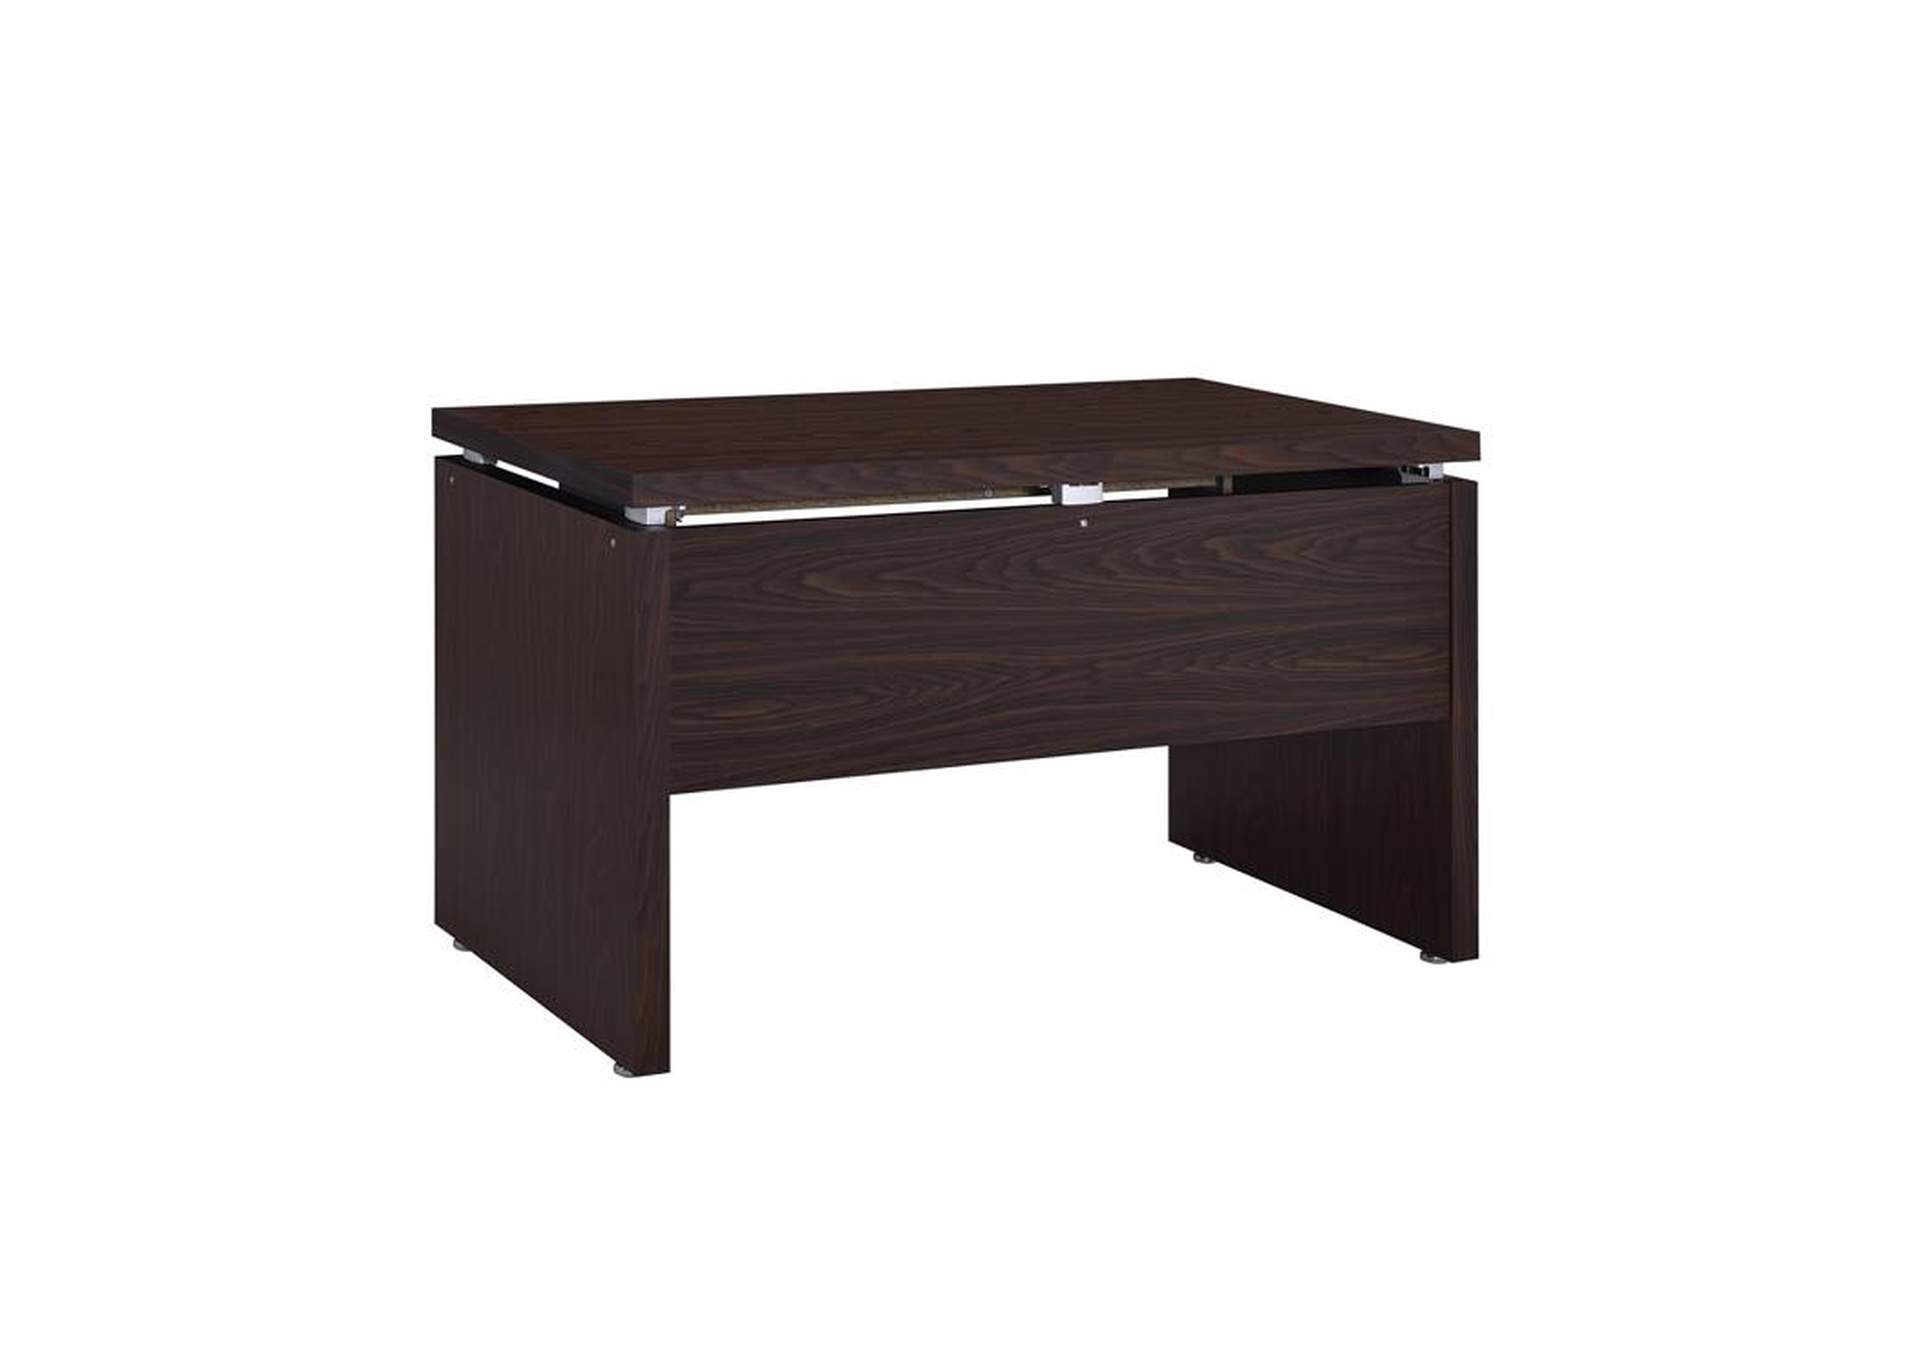 Russell Computer Desk with Keyboard Tray Medium Oak,Coaster Furniture